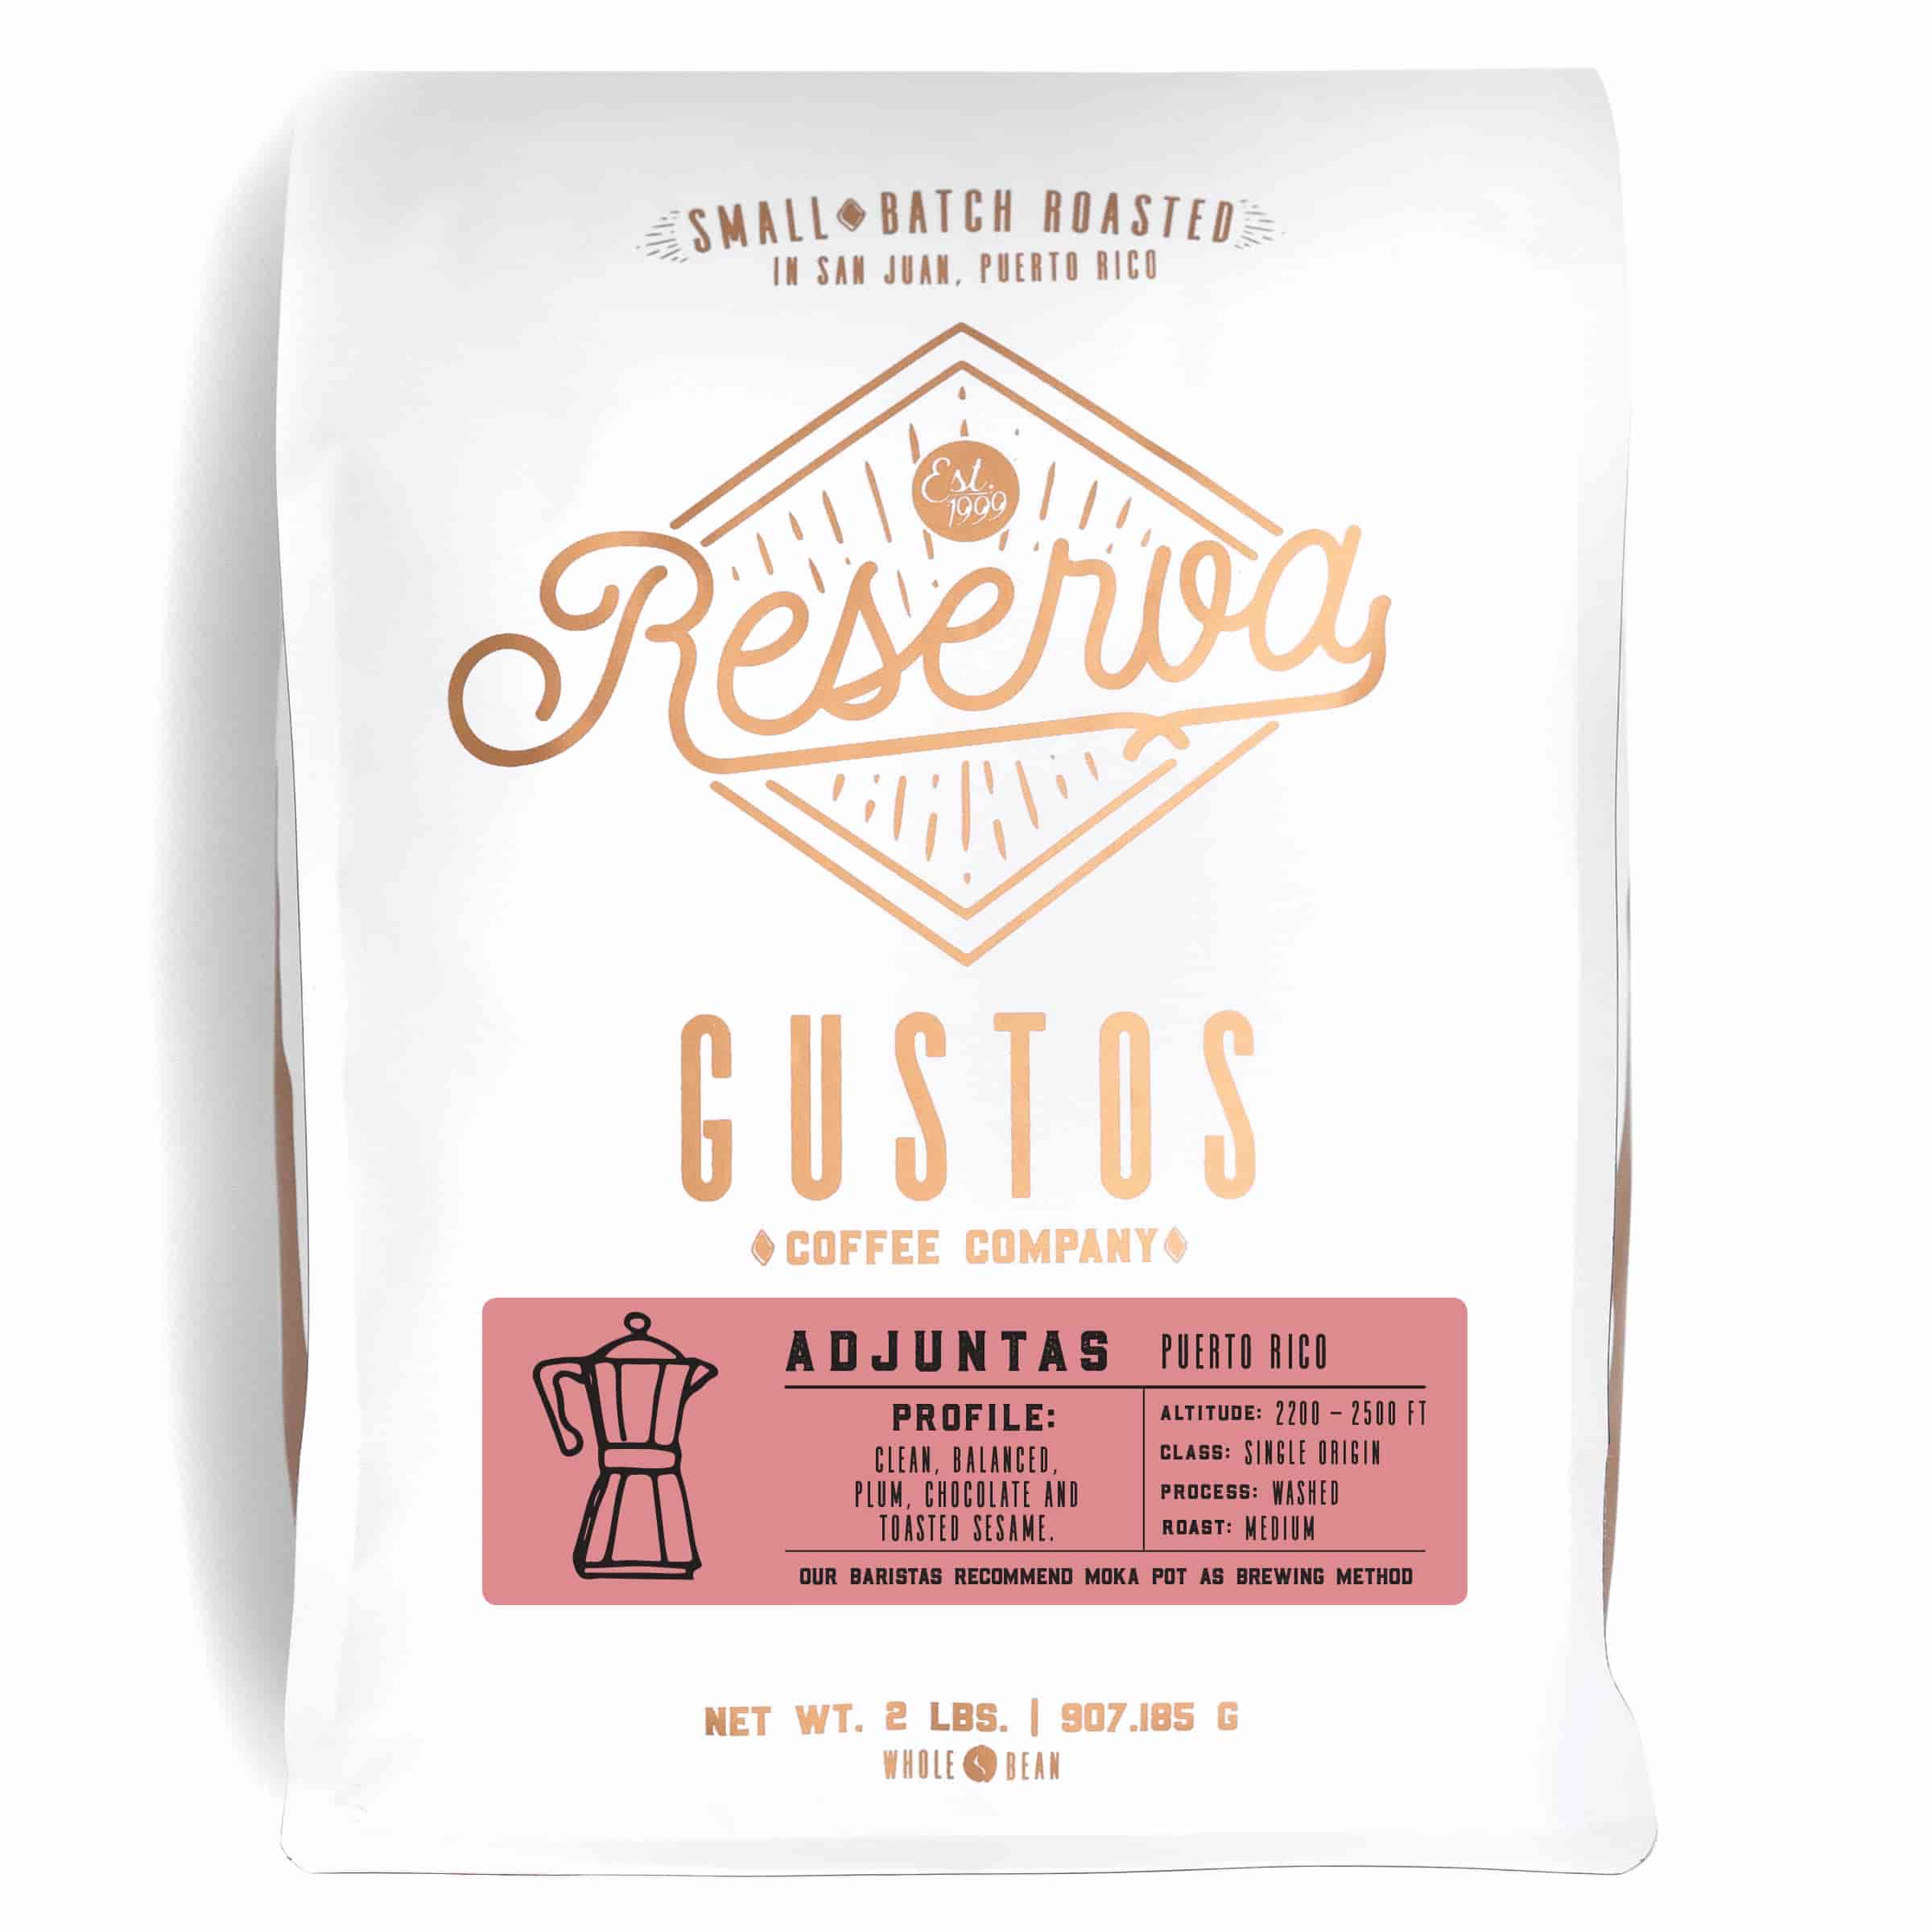 2lb bag of Specialty Coffee from Adjuntas PR single origin cafe by Gustos Coffee Co